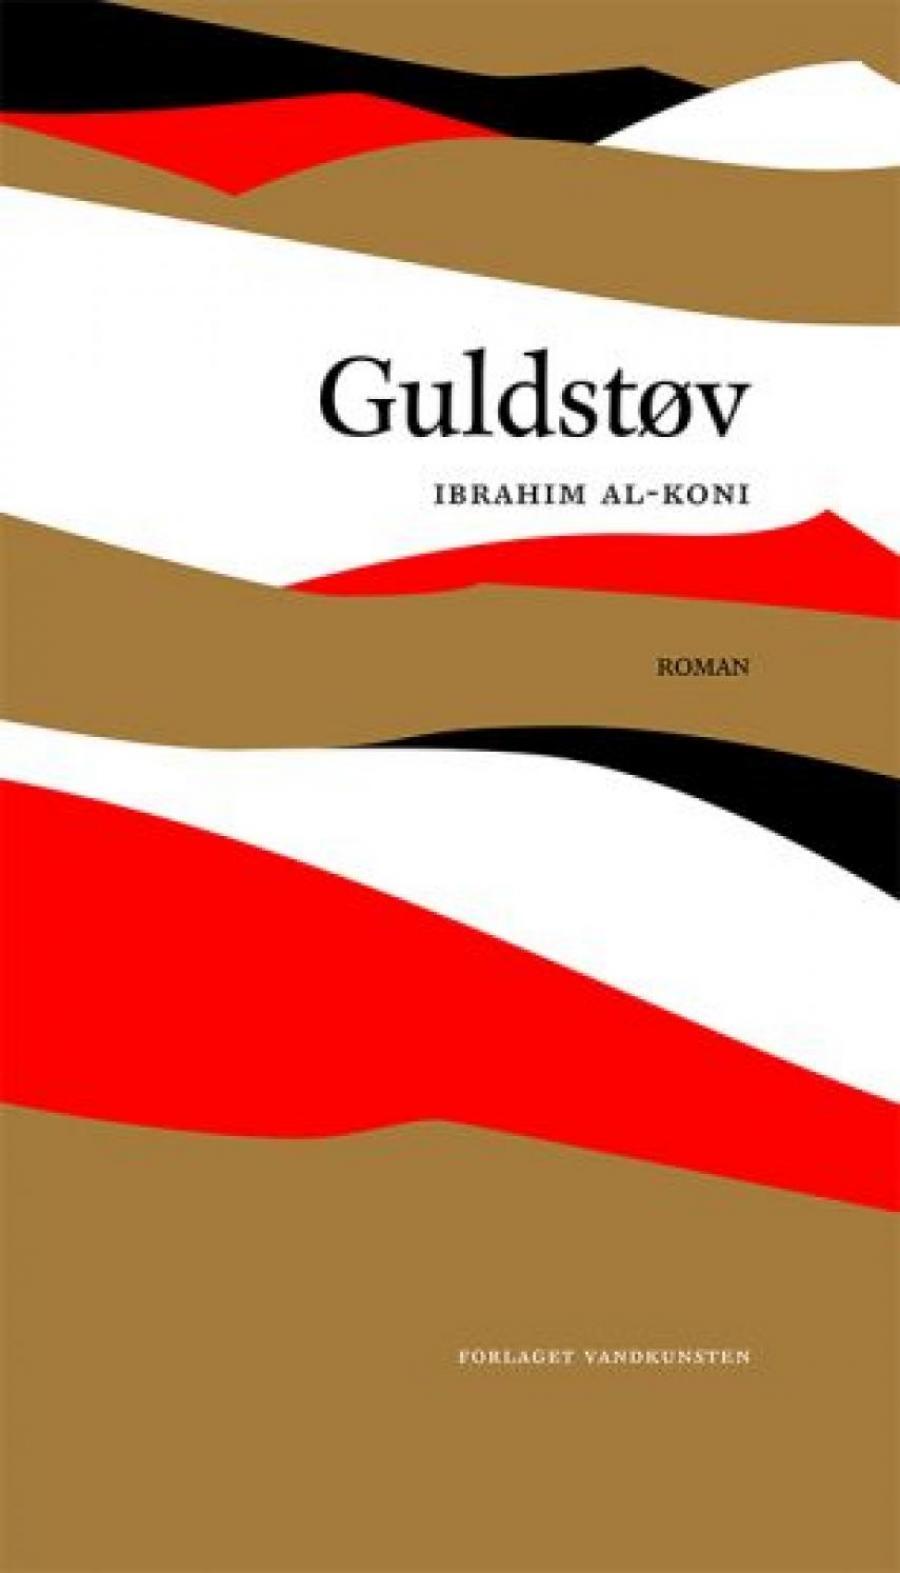 Ibrāhīm al-Kūnīs roman Guldstøv